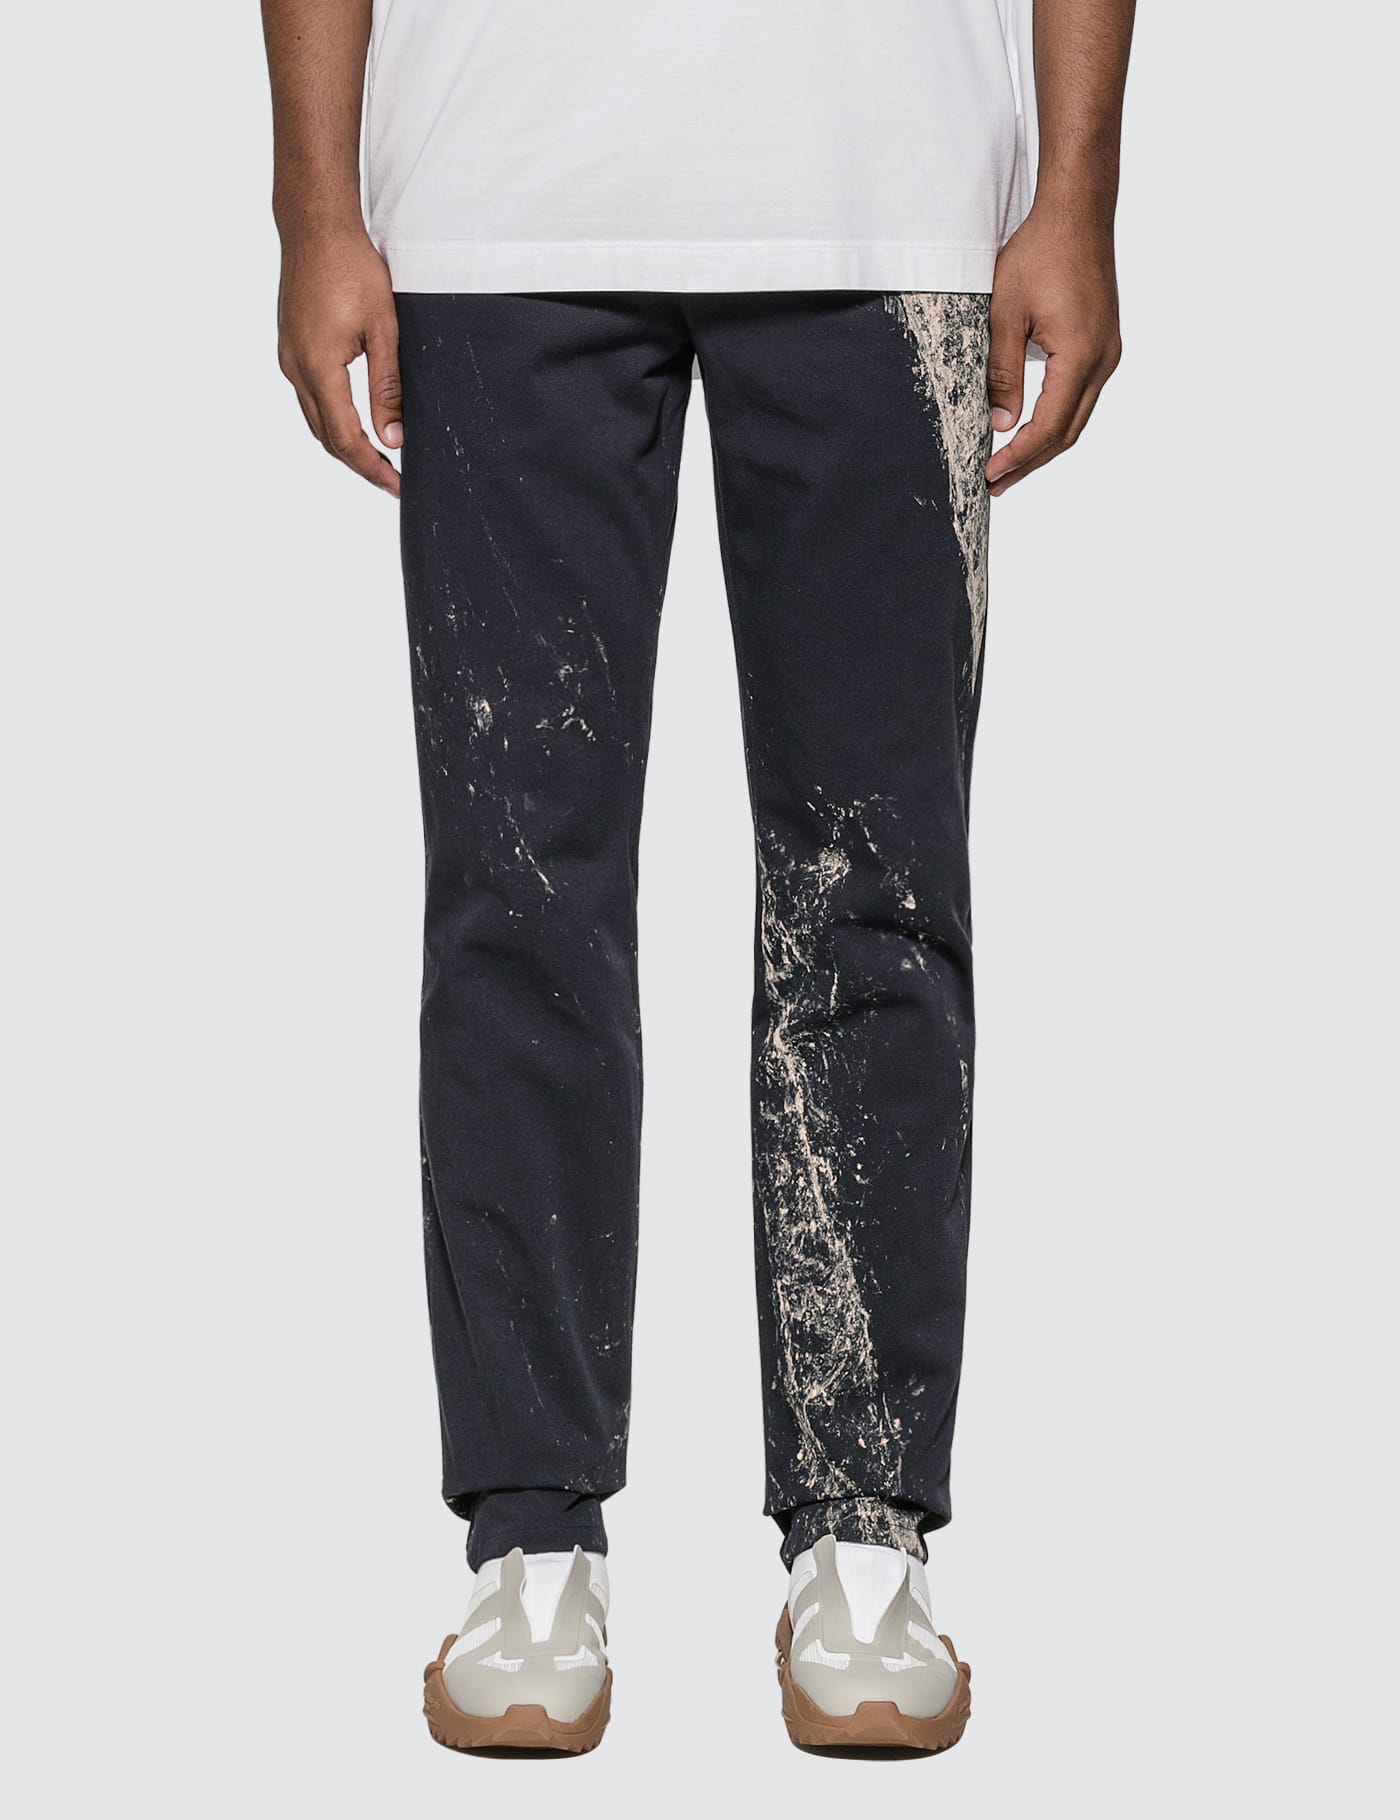 Maison Margiela - Paint Splatter Trousers | HBX - HYPEBEAST 为您搜罗全球潮流时尚品牌